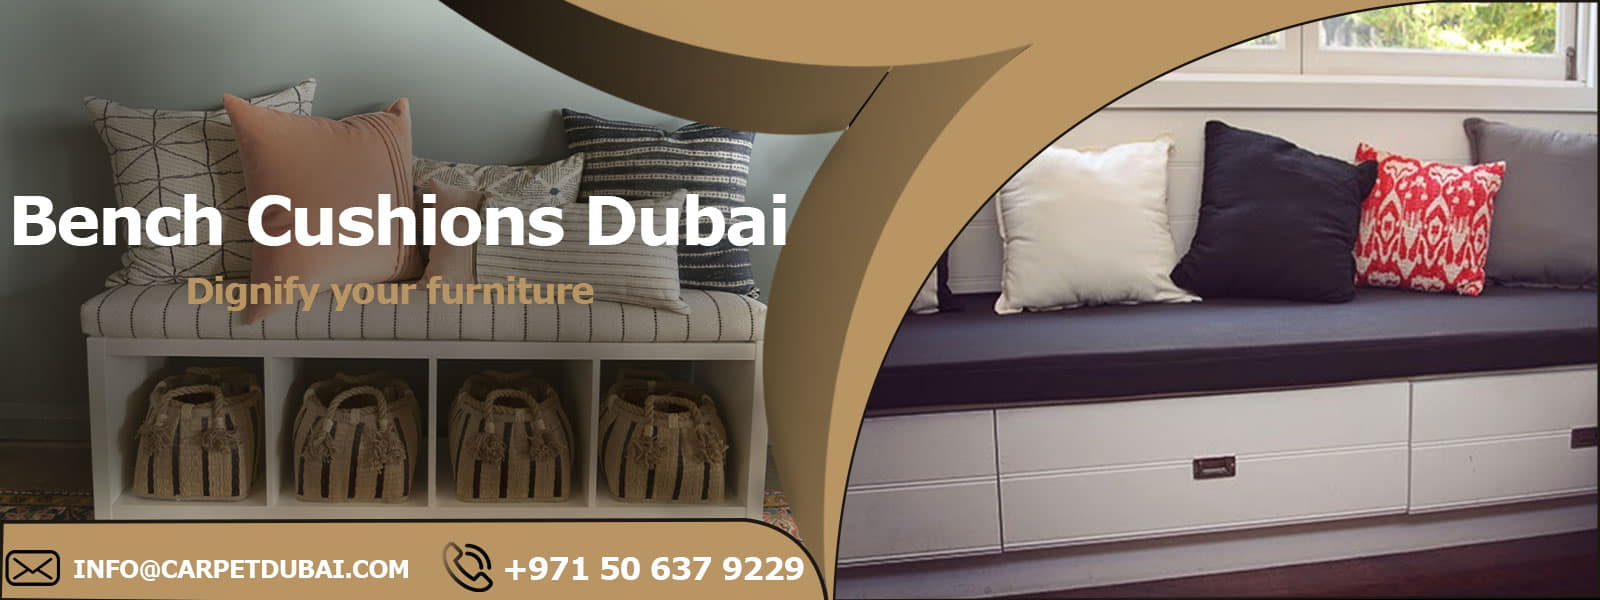 Bench-Cushions-Dubai banner